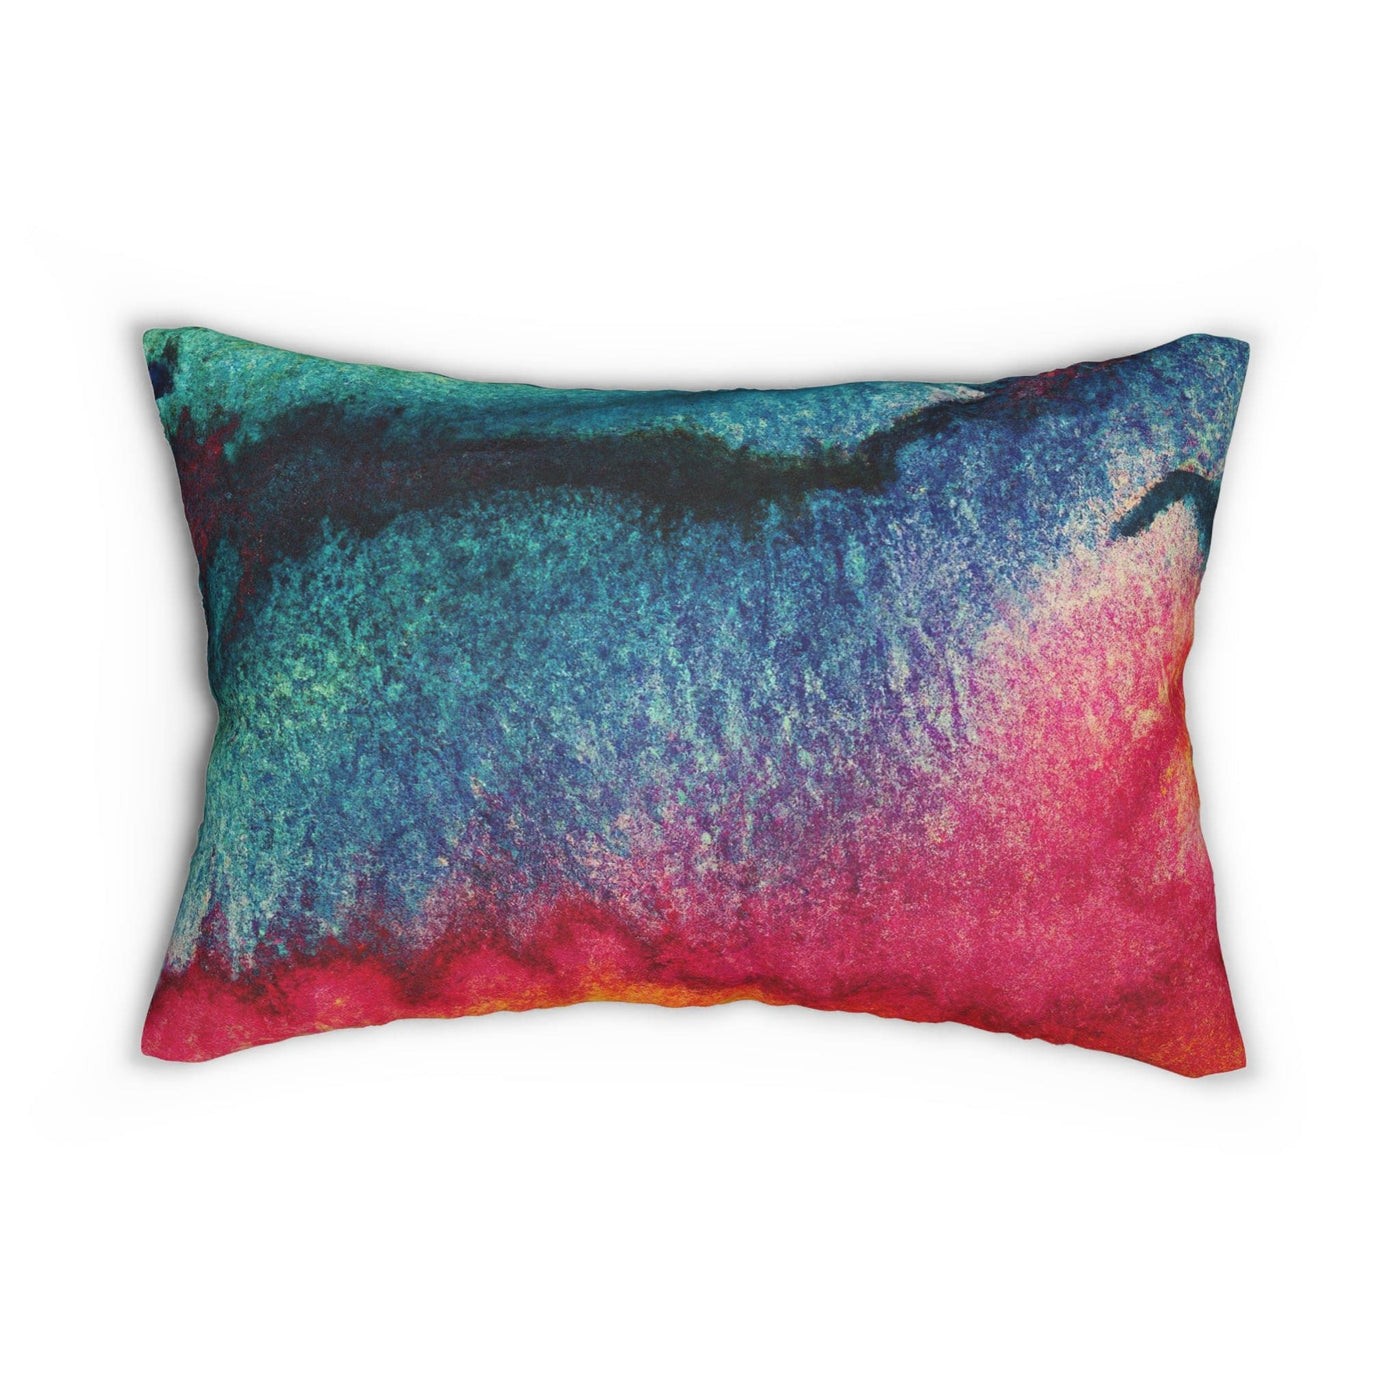 Decorative Lumbar Throw Pillow - Multicolor Watercolor Abstract Print - Home